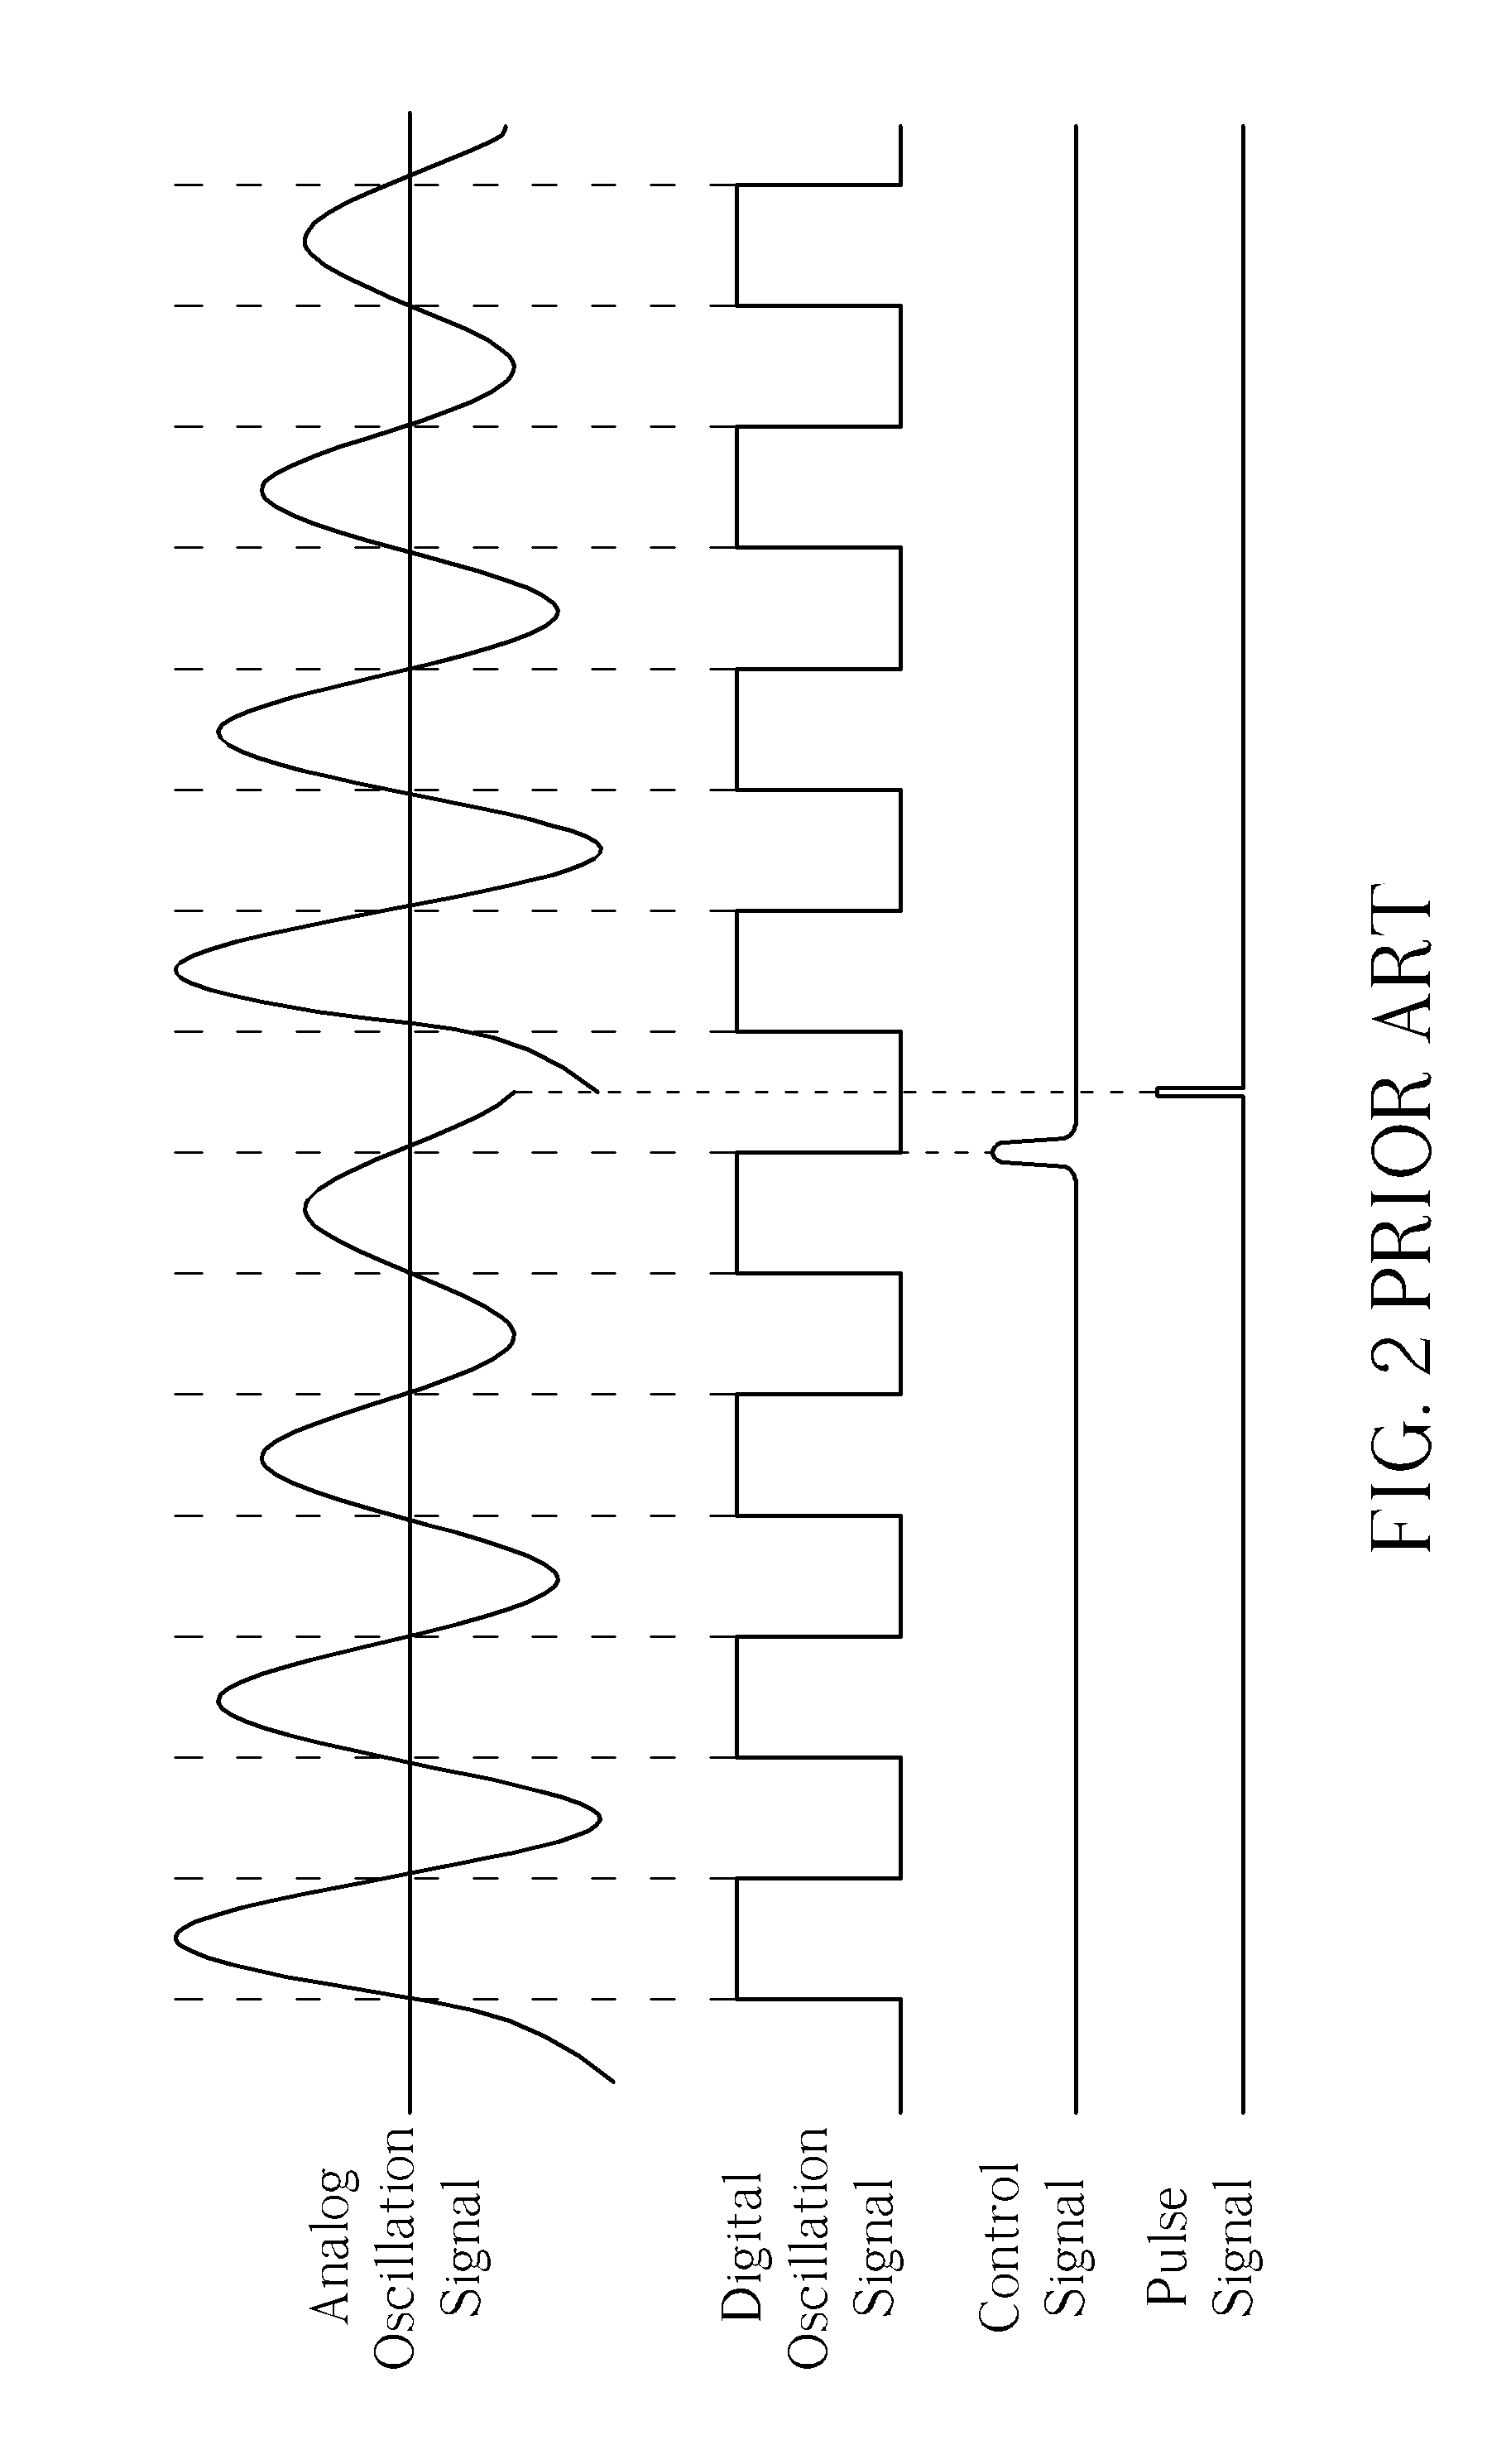 Electronic oscillation signal generation circuit